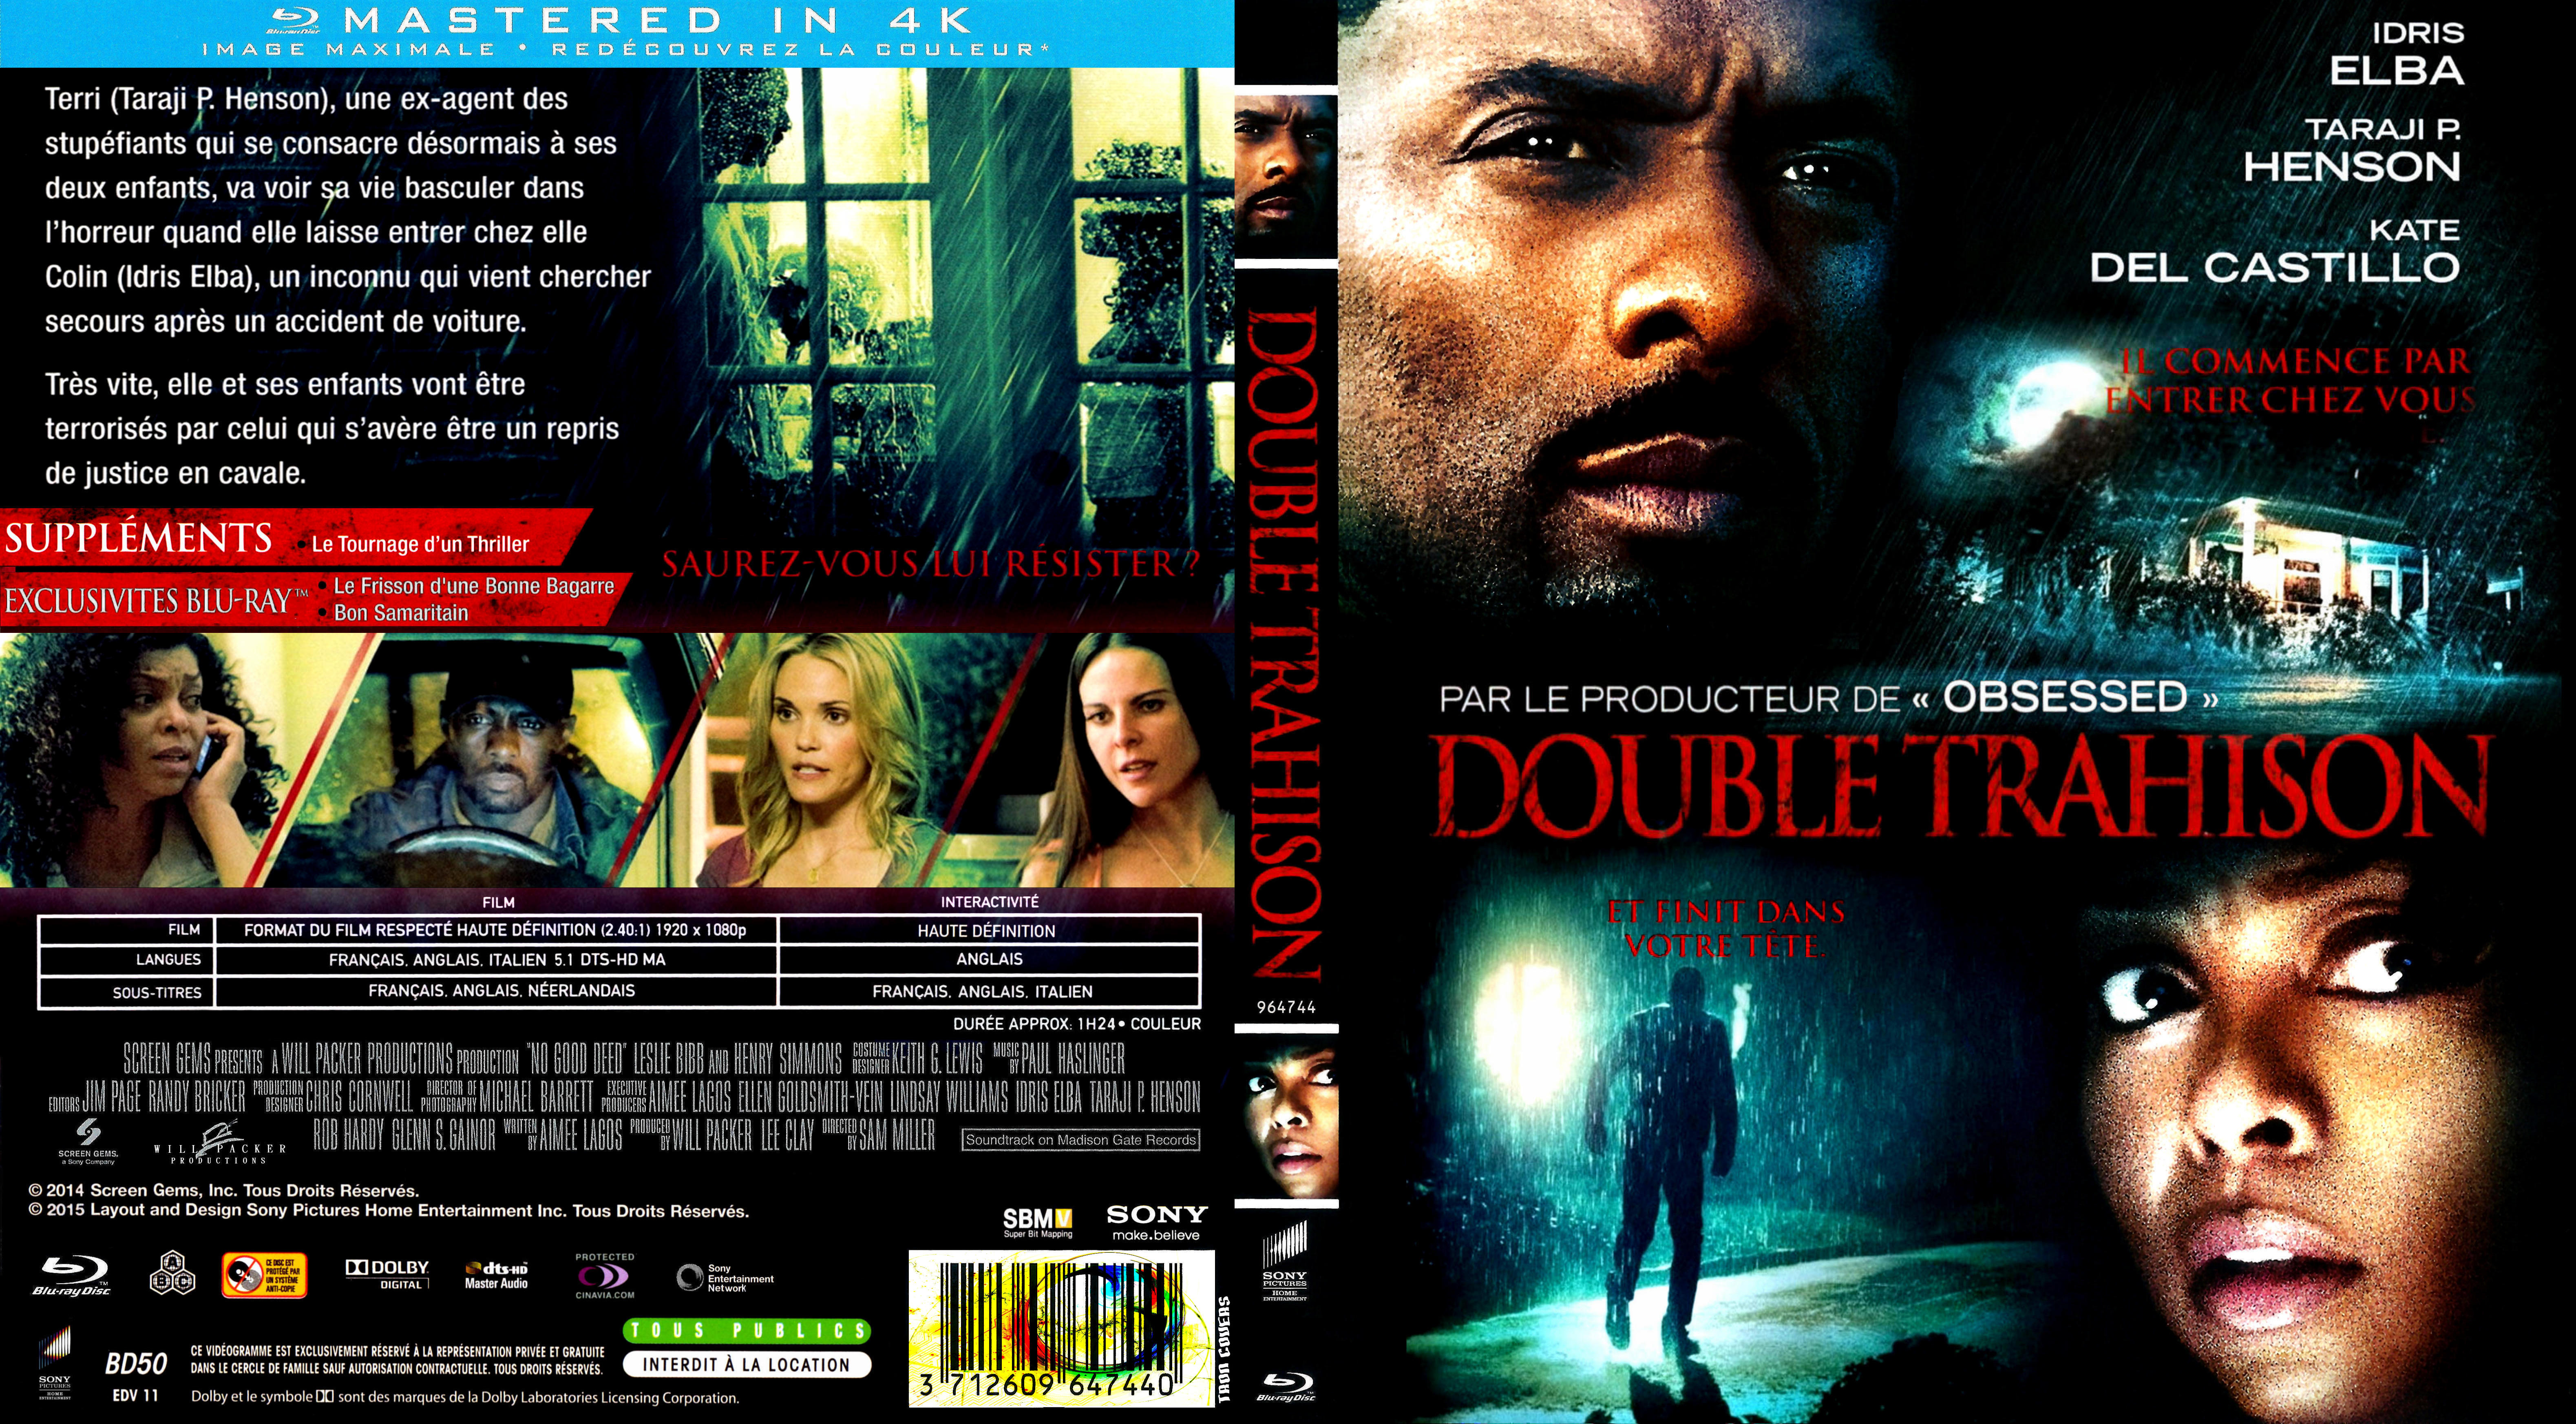 Jaquette DVD Double trahison custom (BLU-RAY)